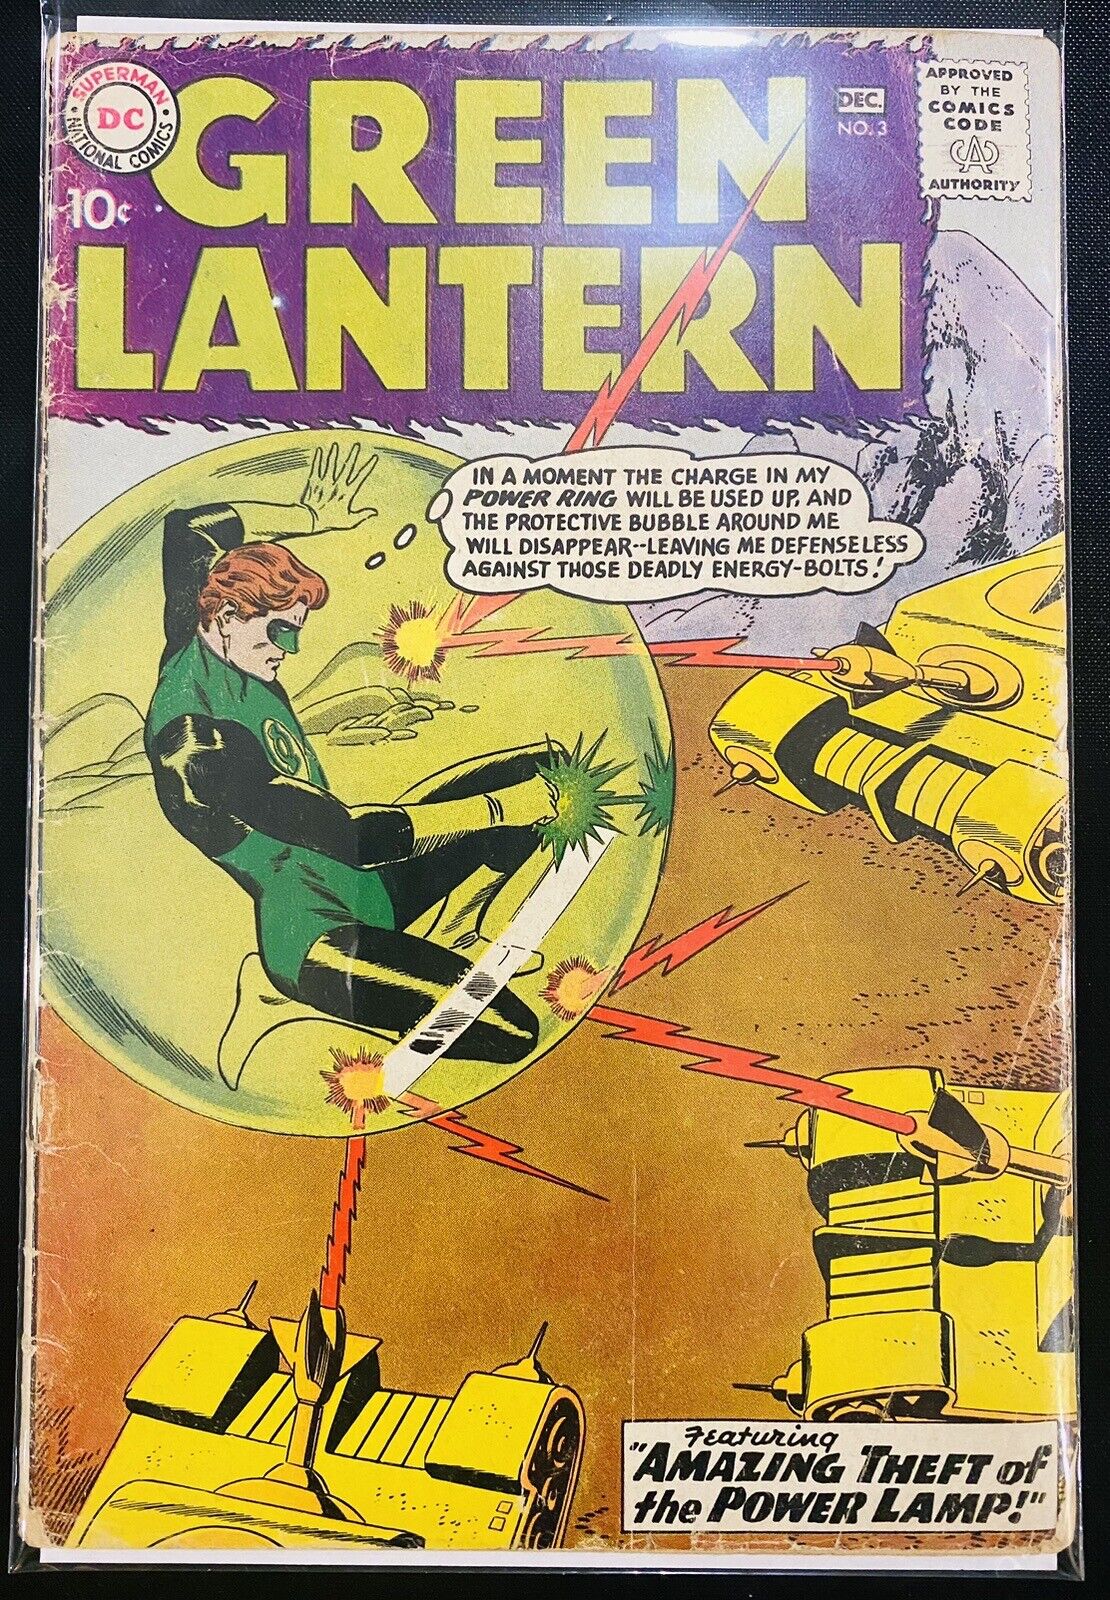 Green Lantern #3 December 1960 Amazing Theft Of The Power Lamp